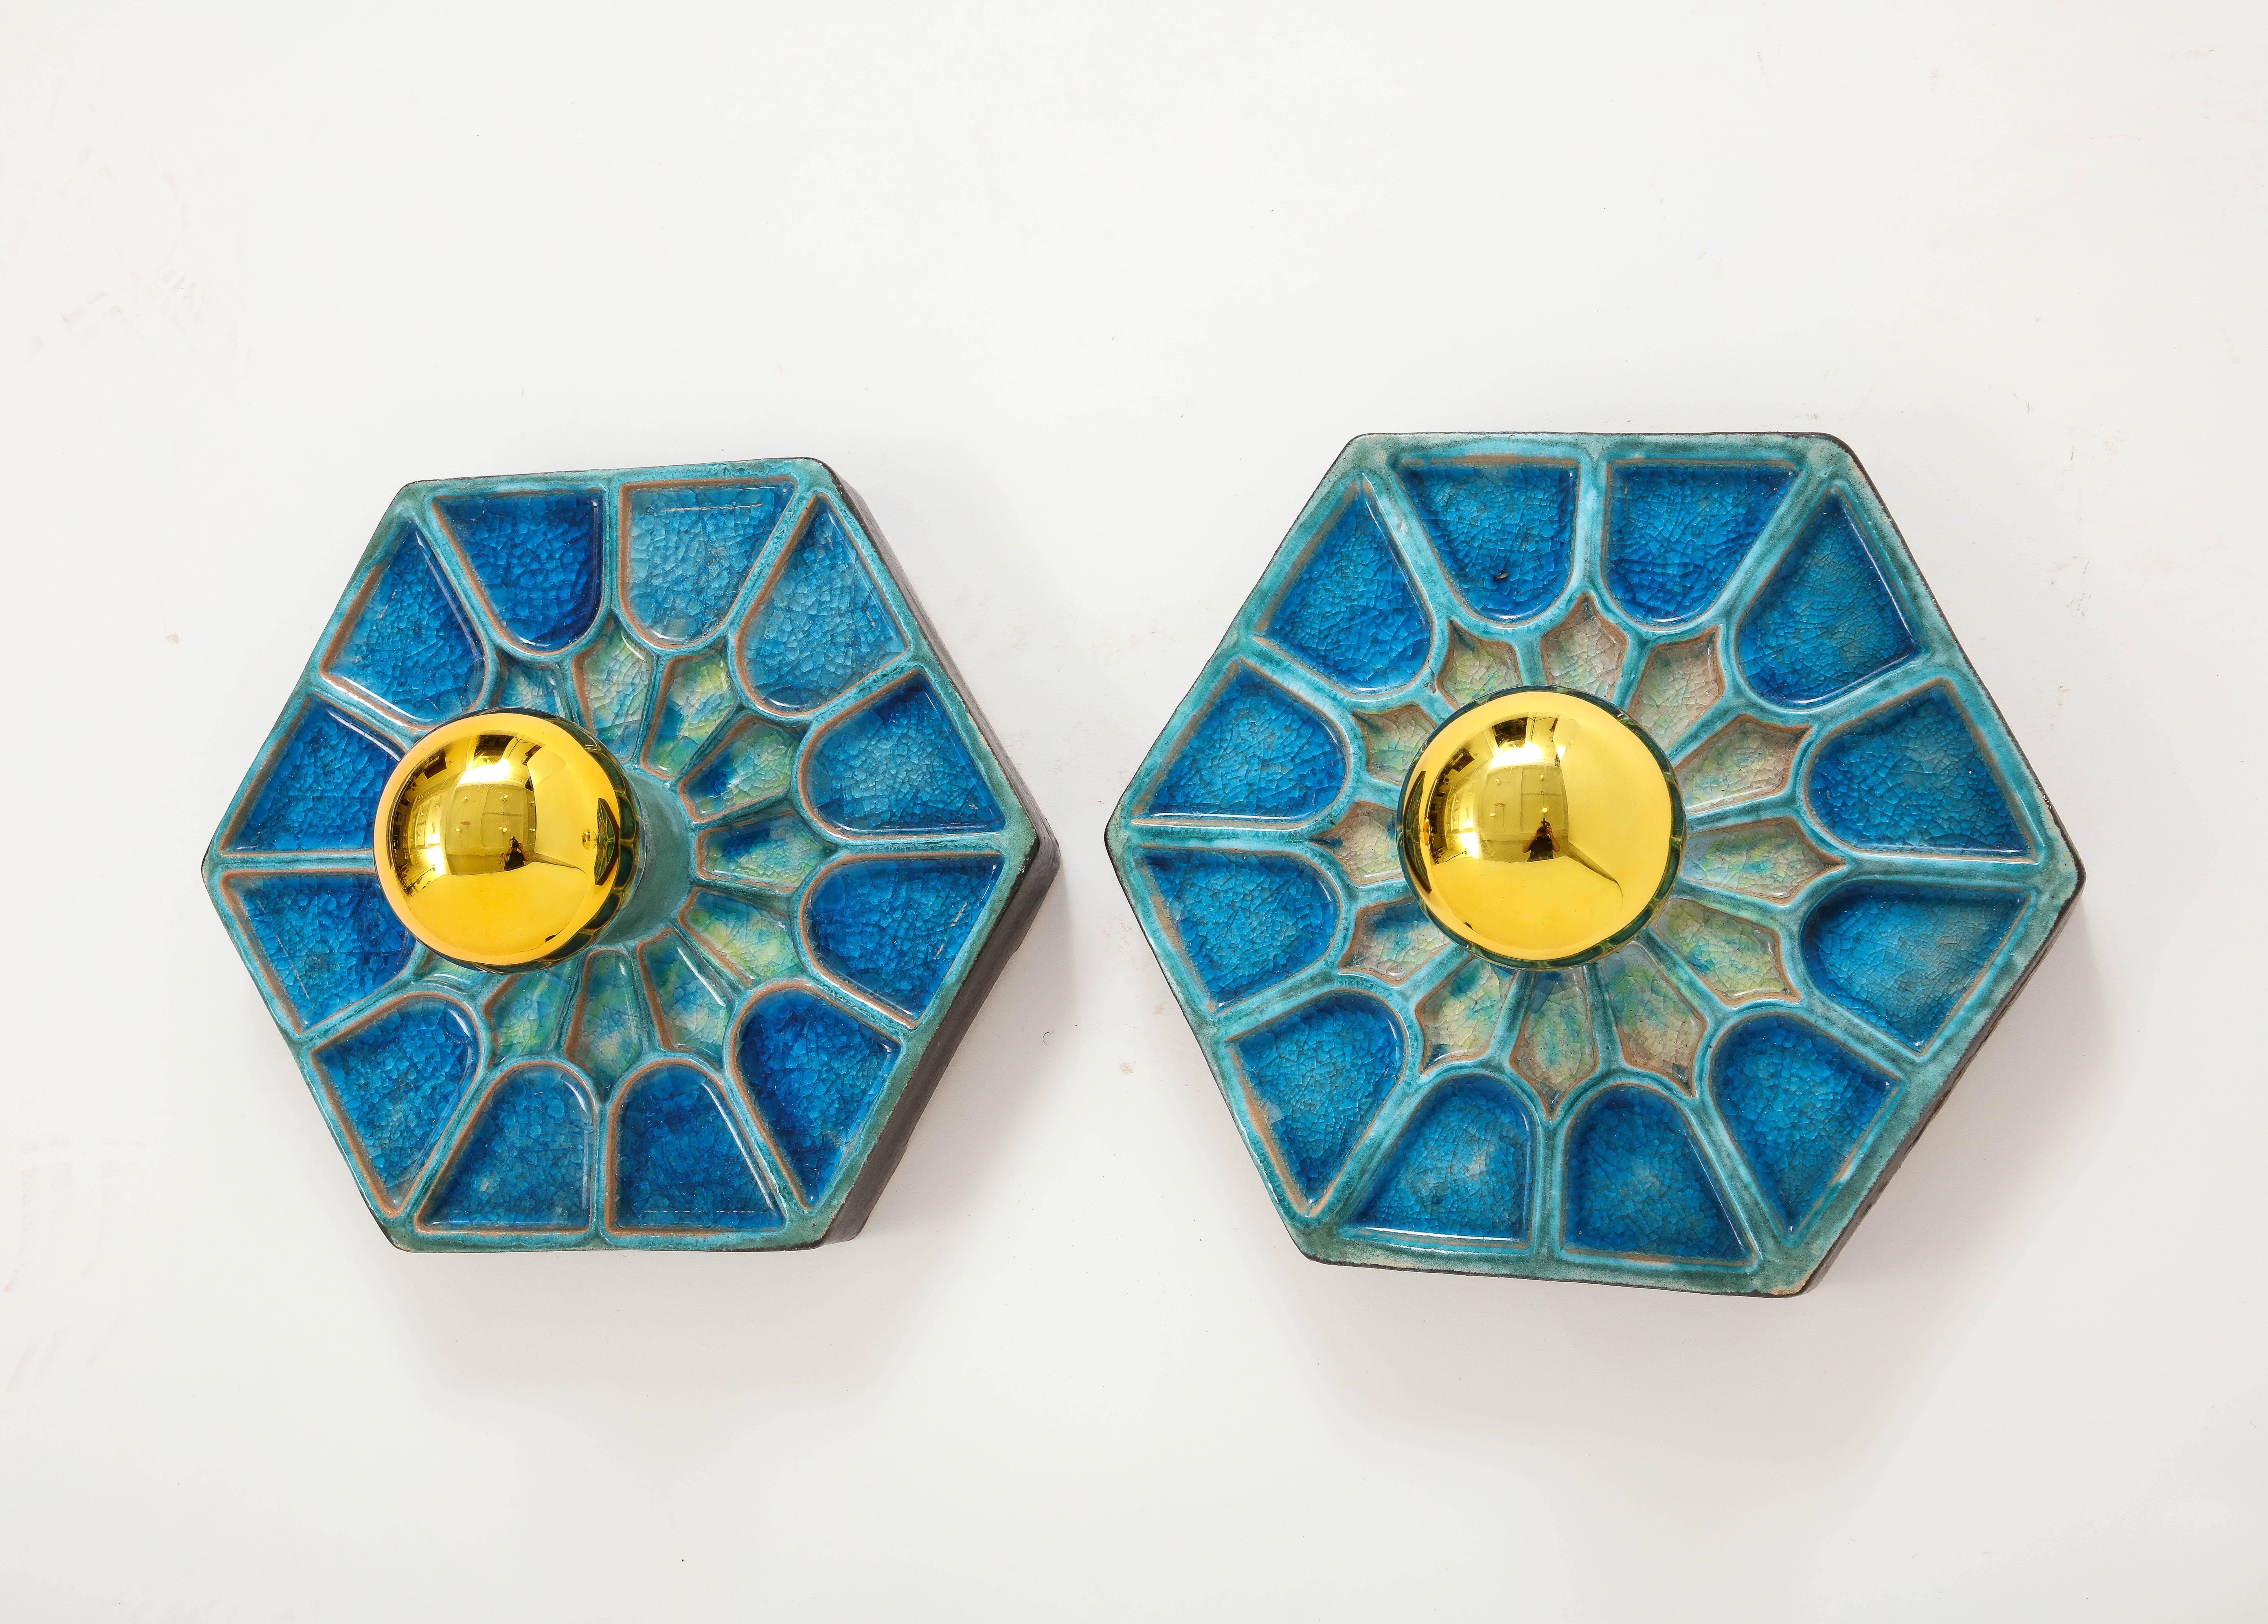 Pair of Blue Shades Ceramic Sconces, Scandinavia, 1970s For Sale 1